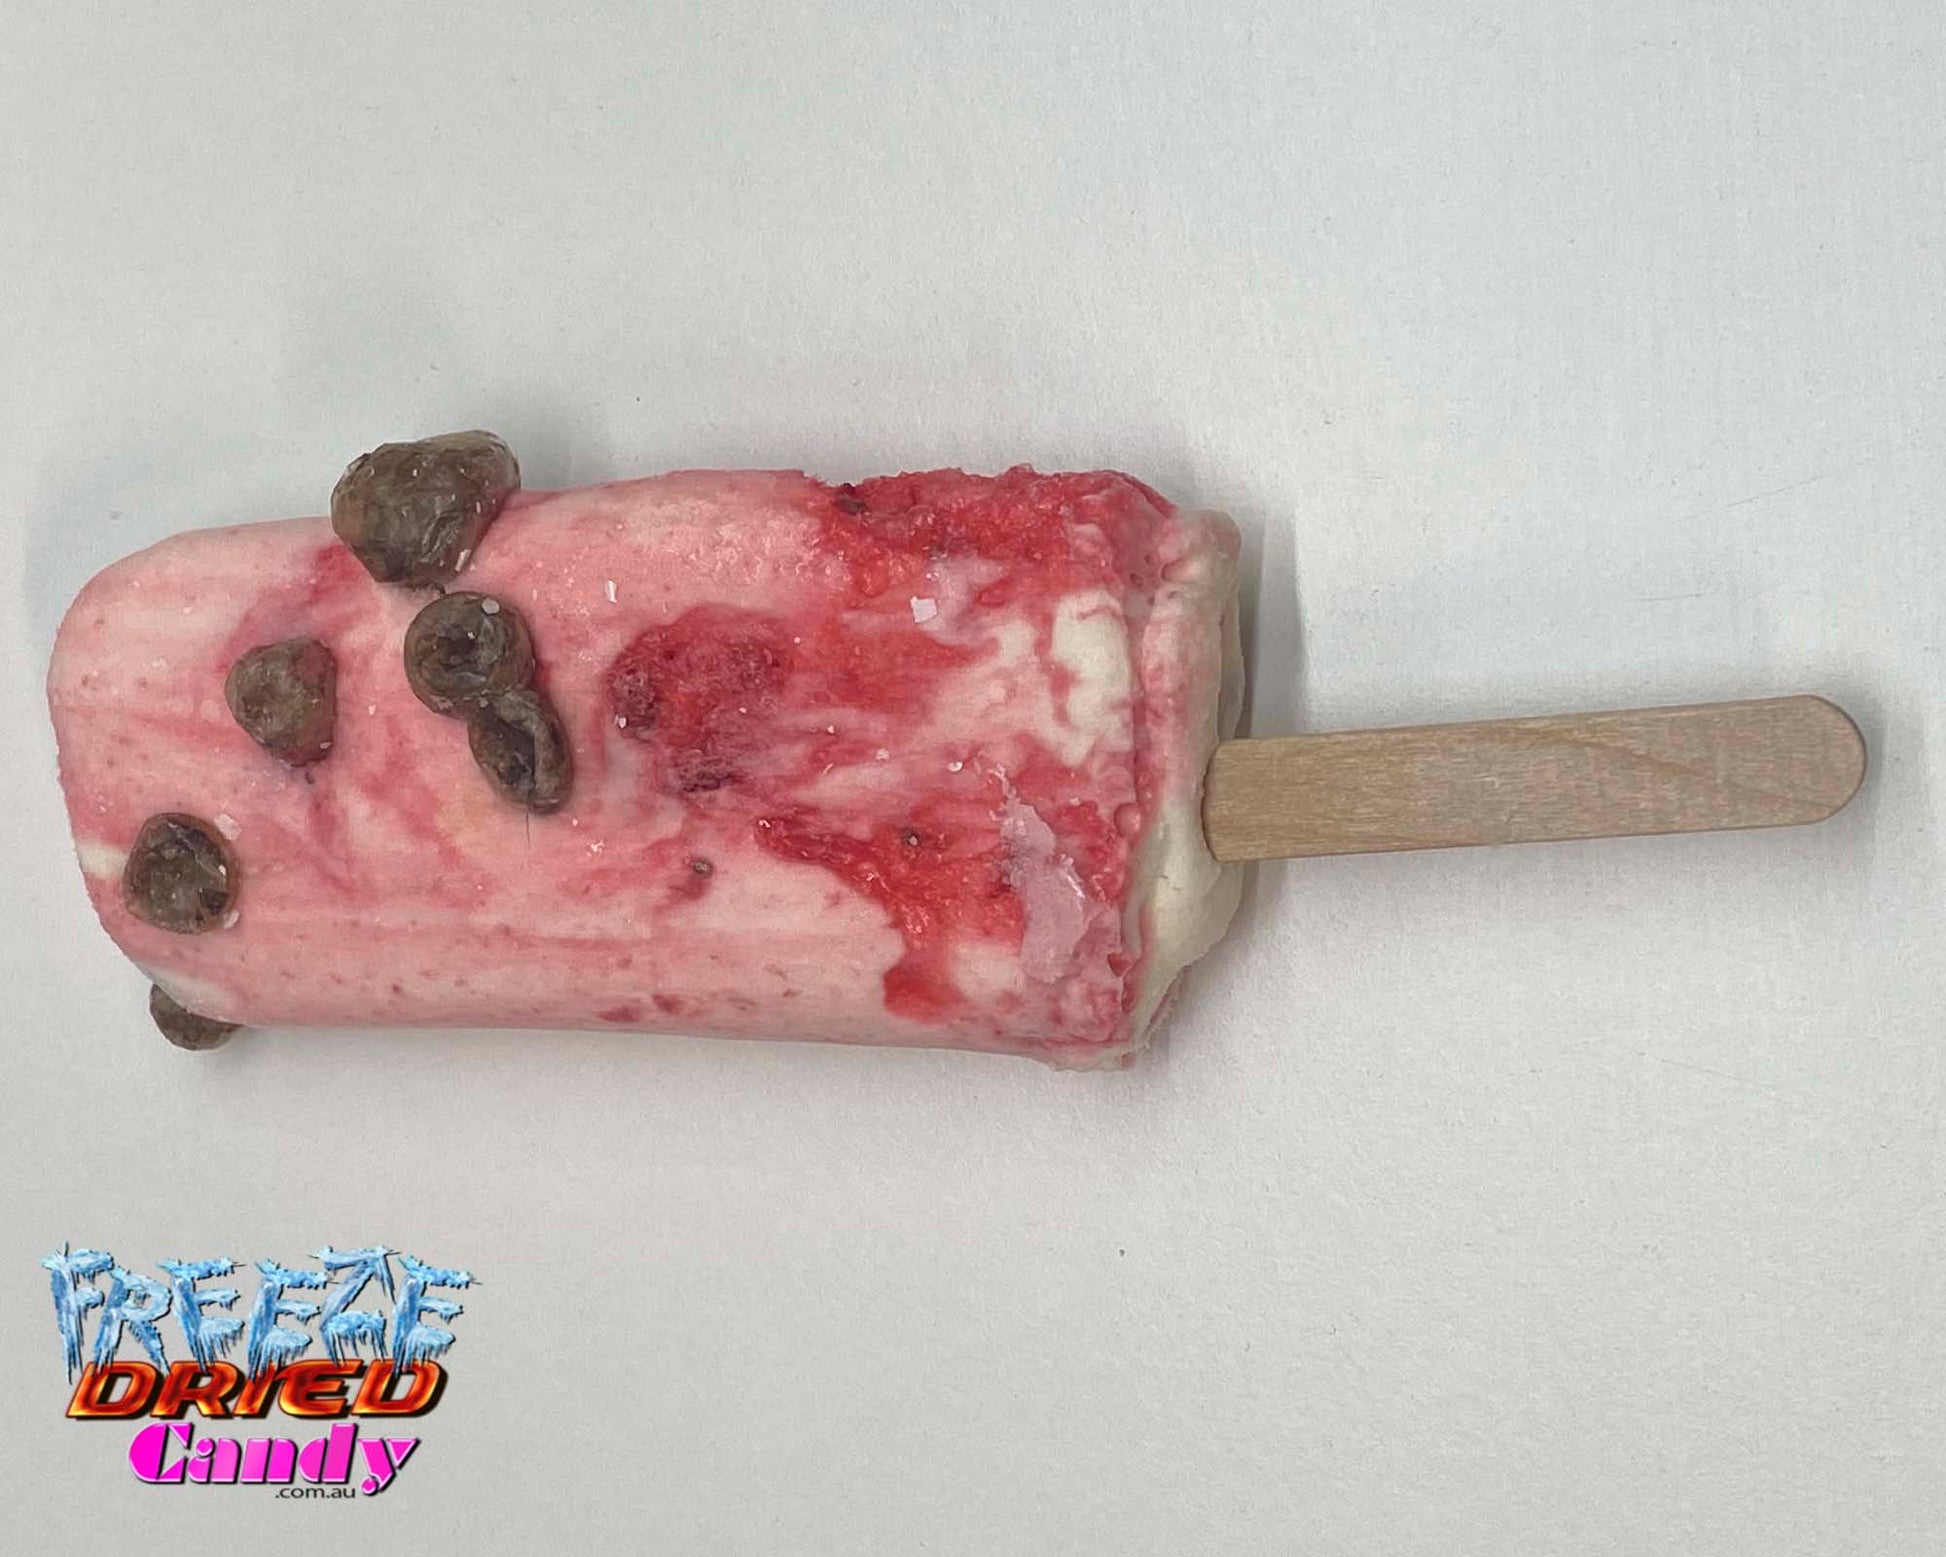 Freeze Dried Ice Cream - Bubble Tea - BubbleMe - Strawberry - Freeze Dried Candy Lollies | Australia